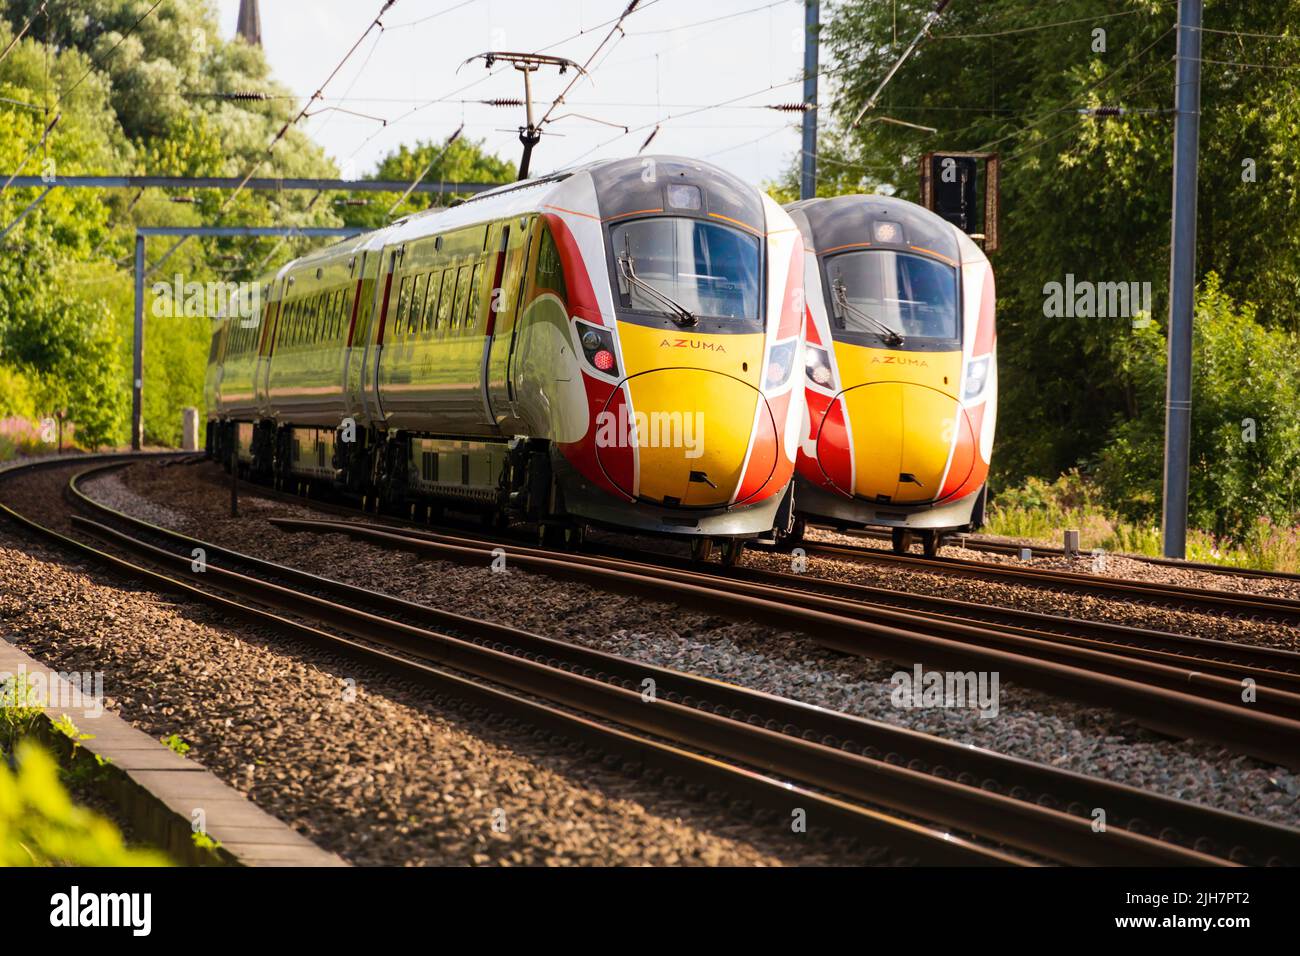 Dos trenes híbridos diésel-eléctricos 'Azuma' de la línea East Coast Main en Offord Cluny, Cambridgeshire, E. Foto de stock